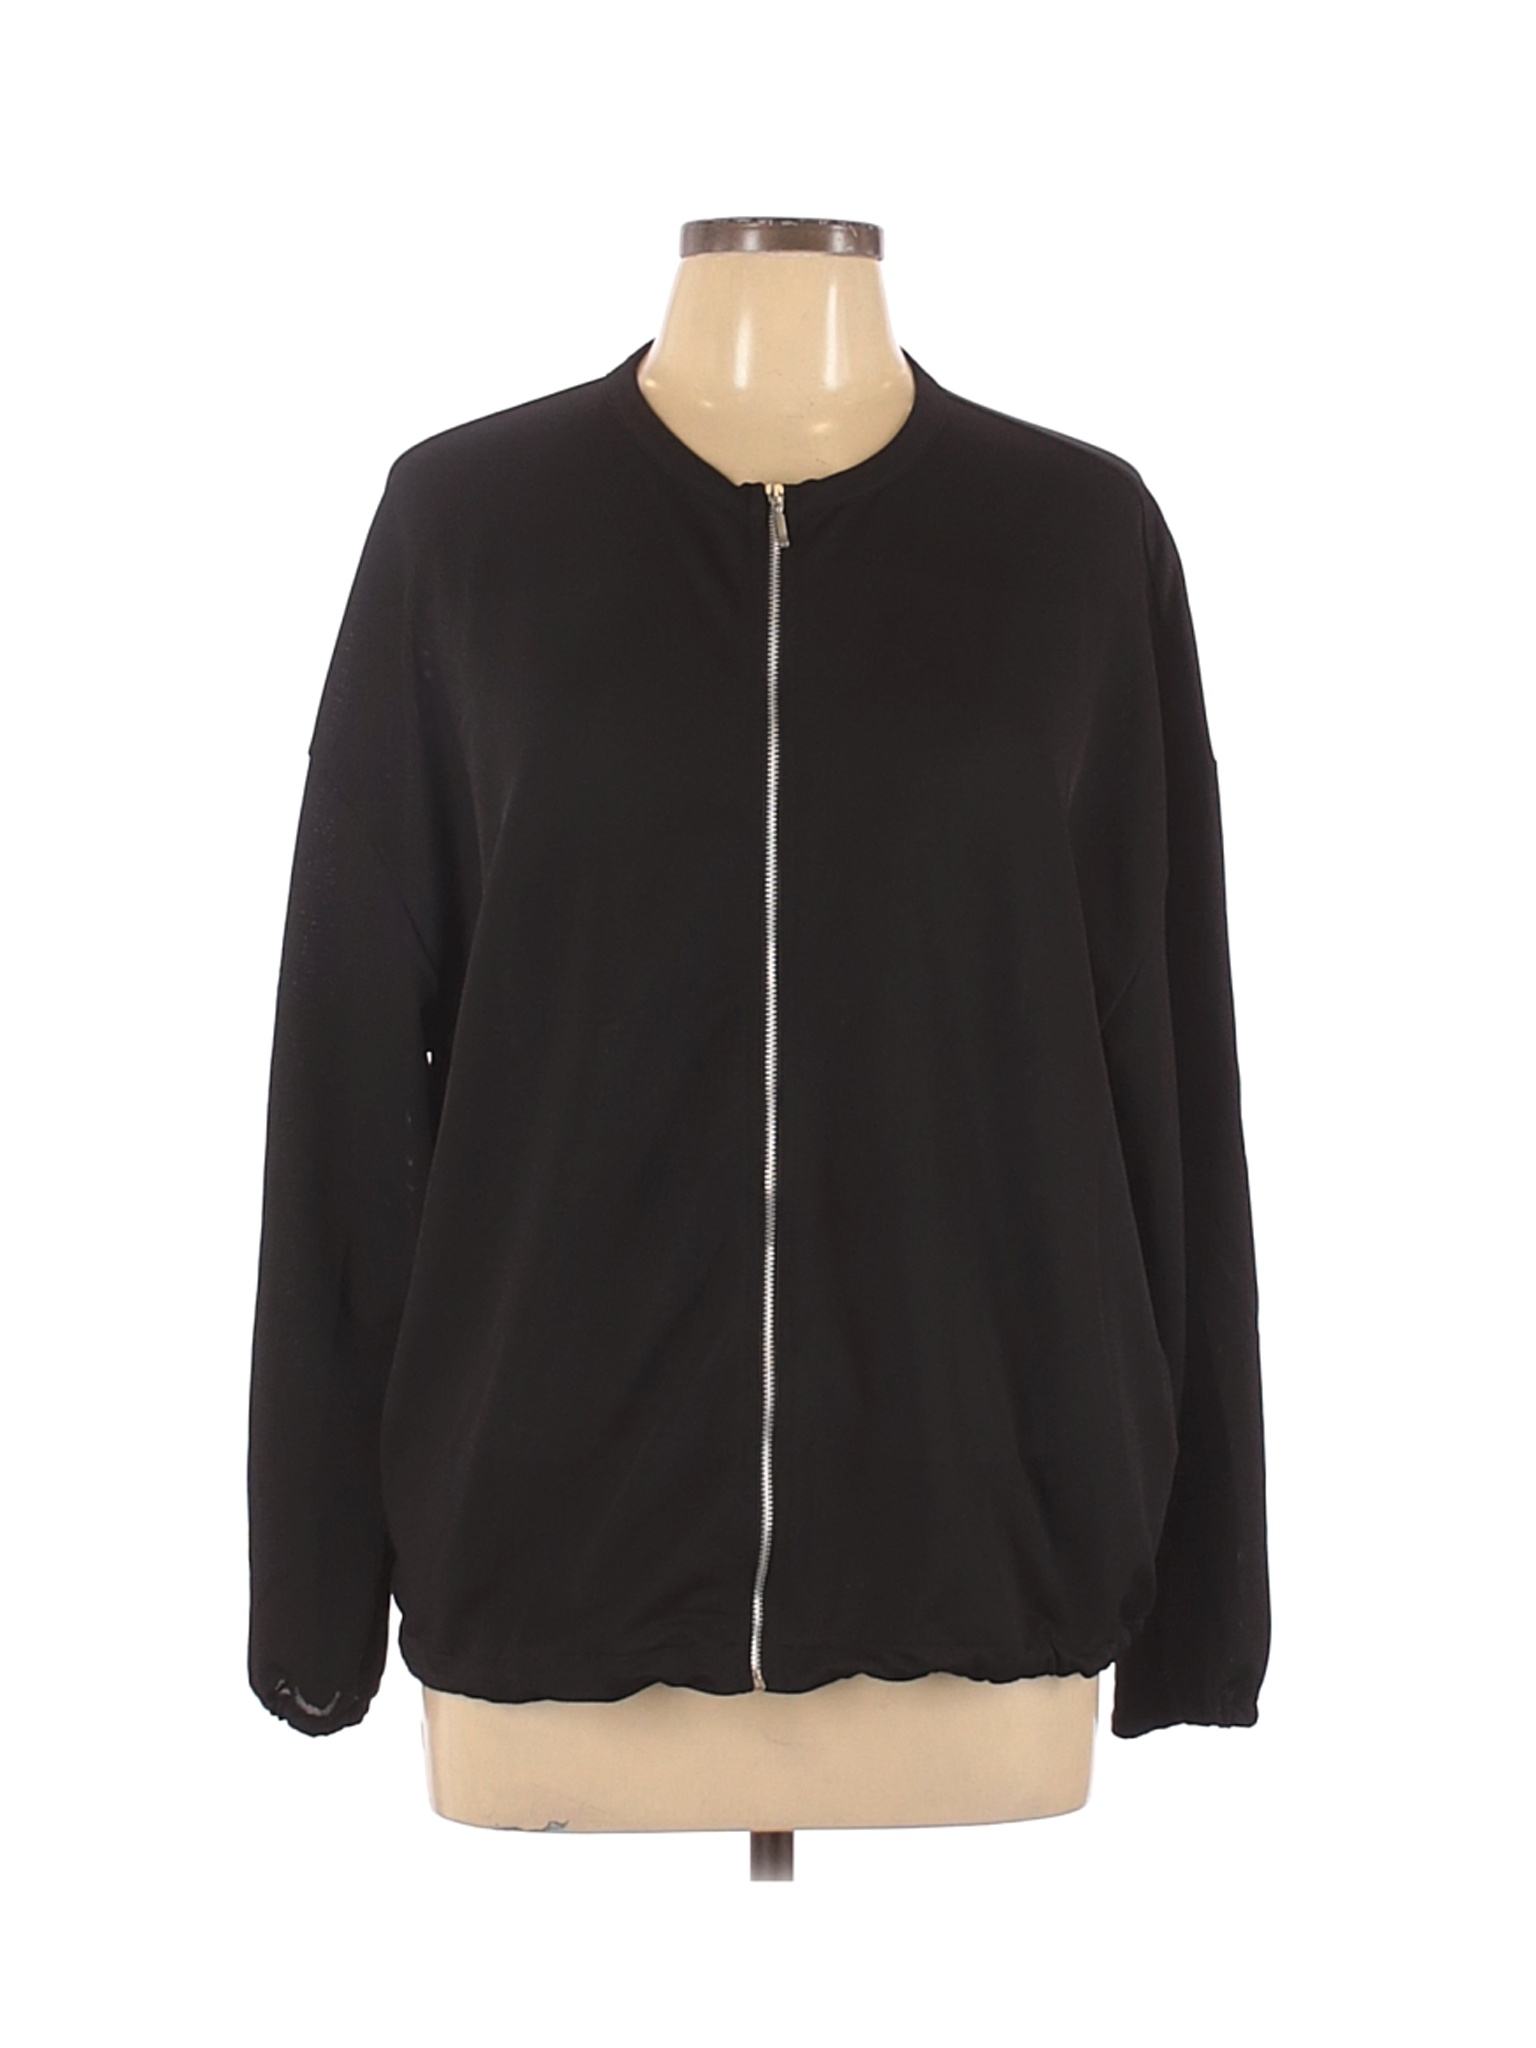 Trafaluc by Zara Women Black Jacket L | eBay